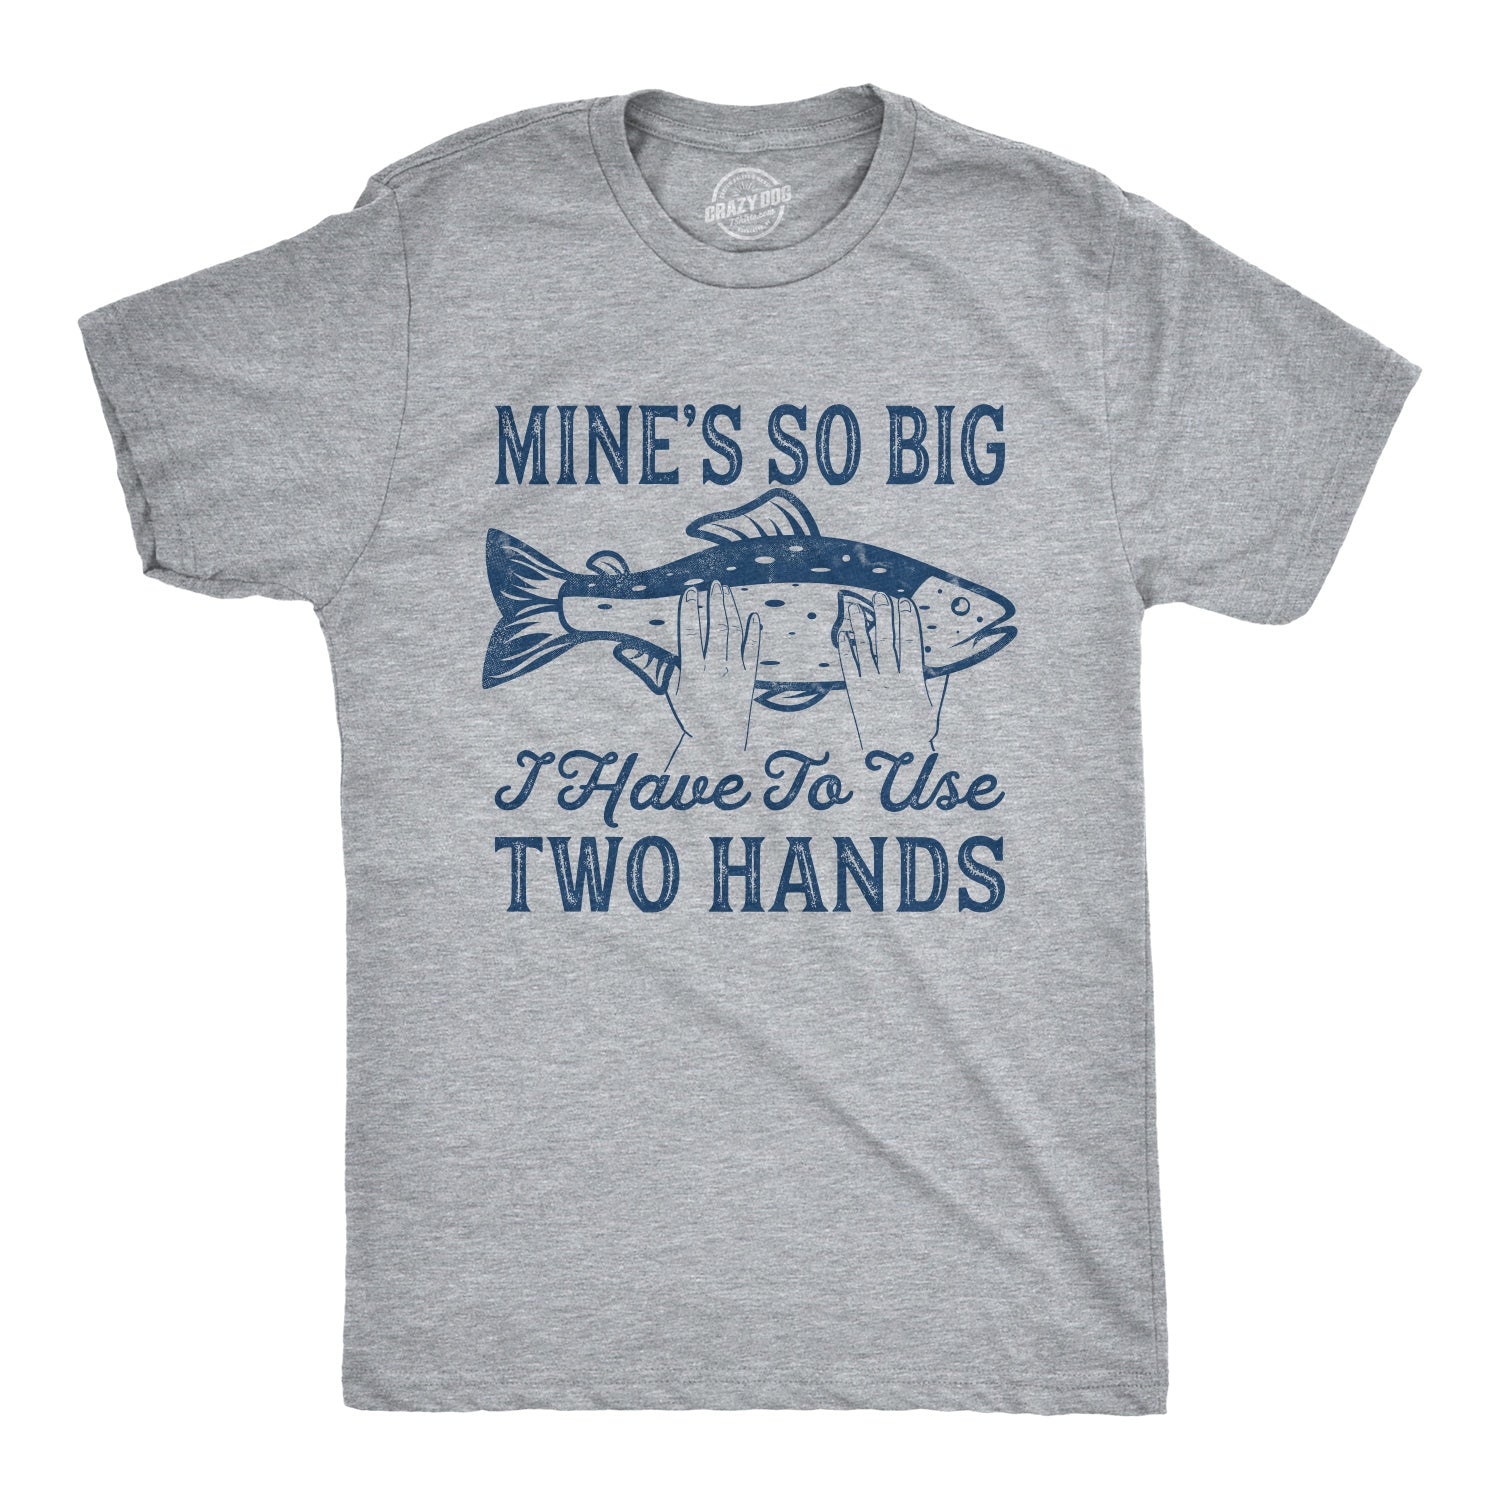 Men's big and tall t-shirt funny fishing shirt bass trout fish tall tee  shirt